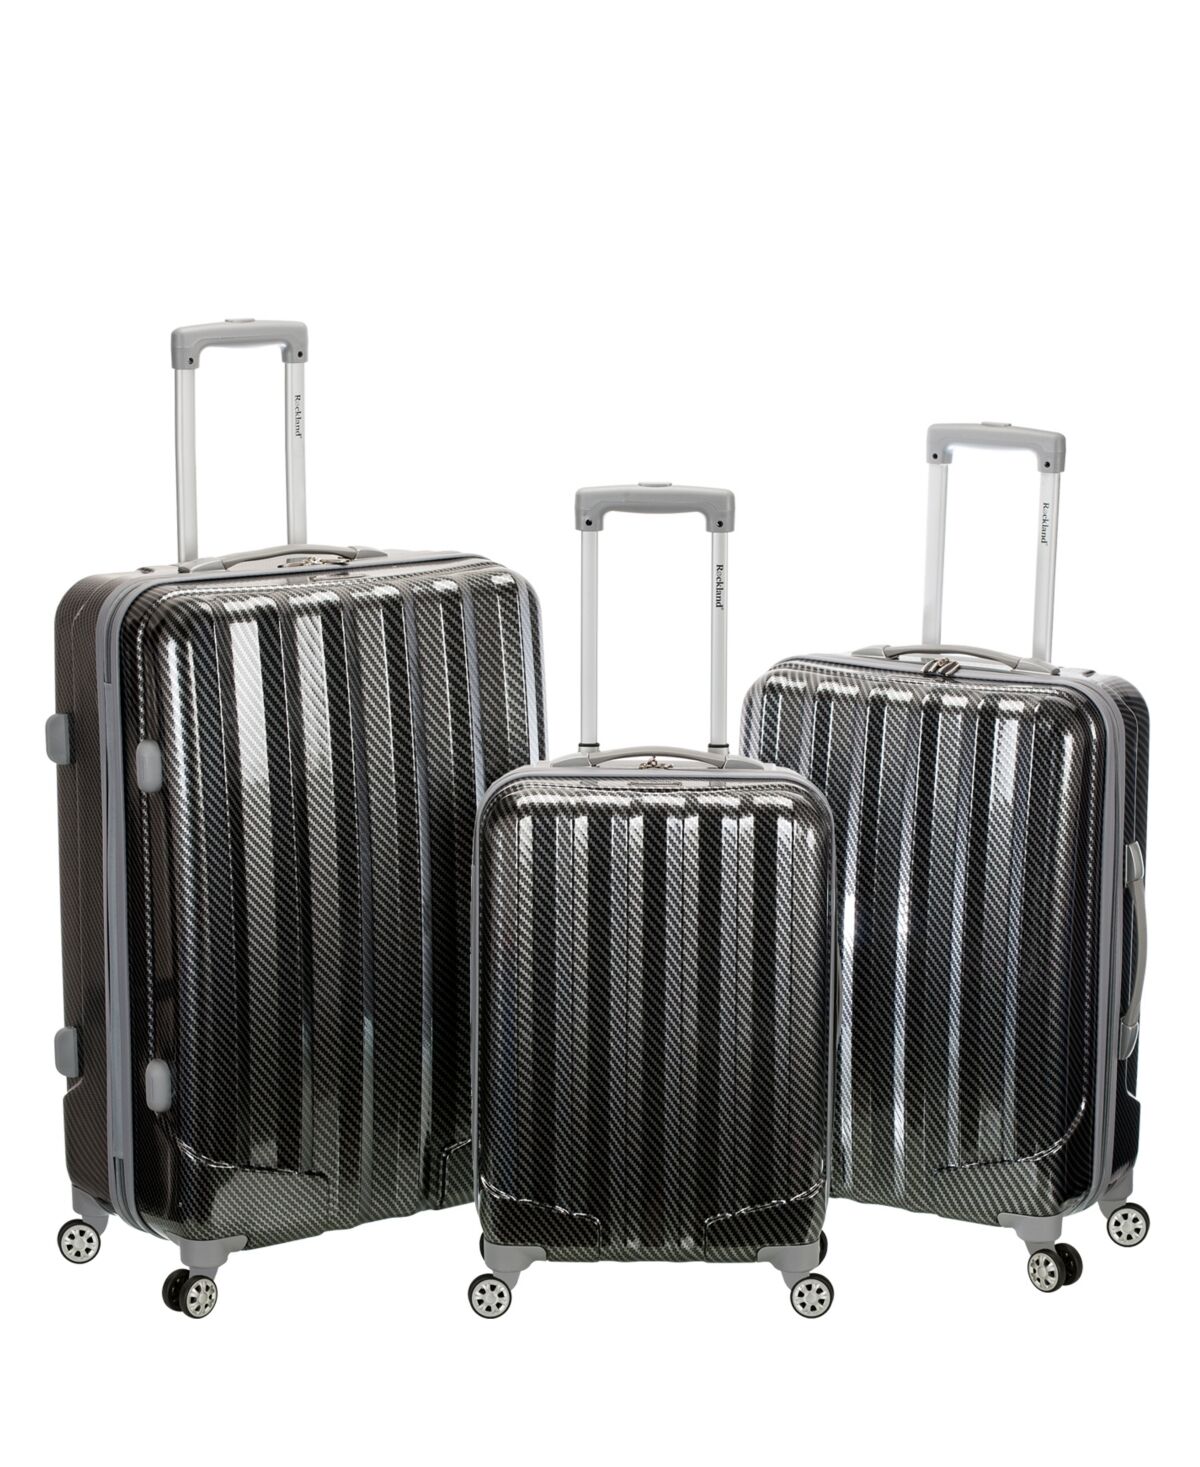 Rockland 3-Pc. Hardside Luggage Set - Fiber